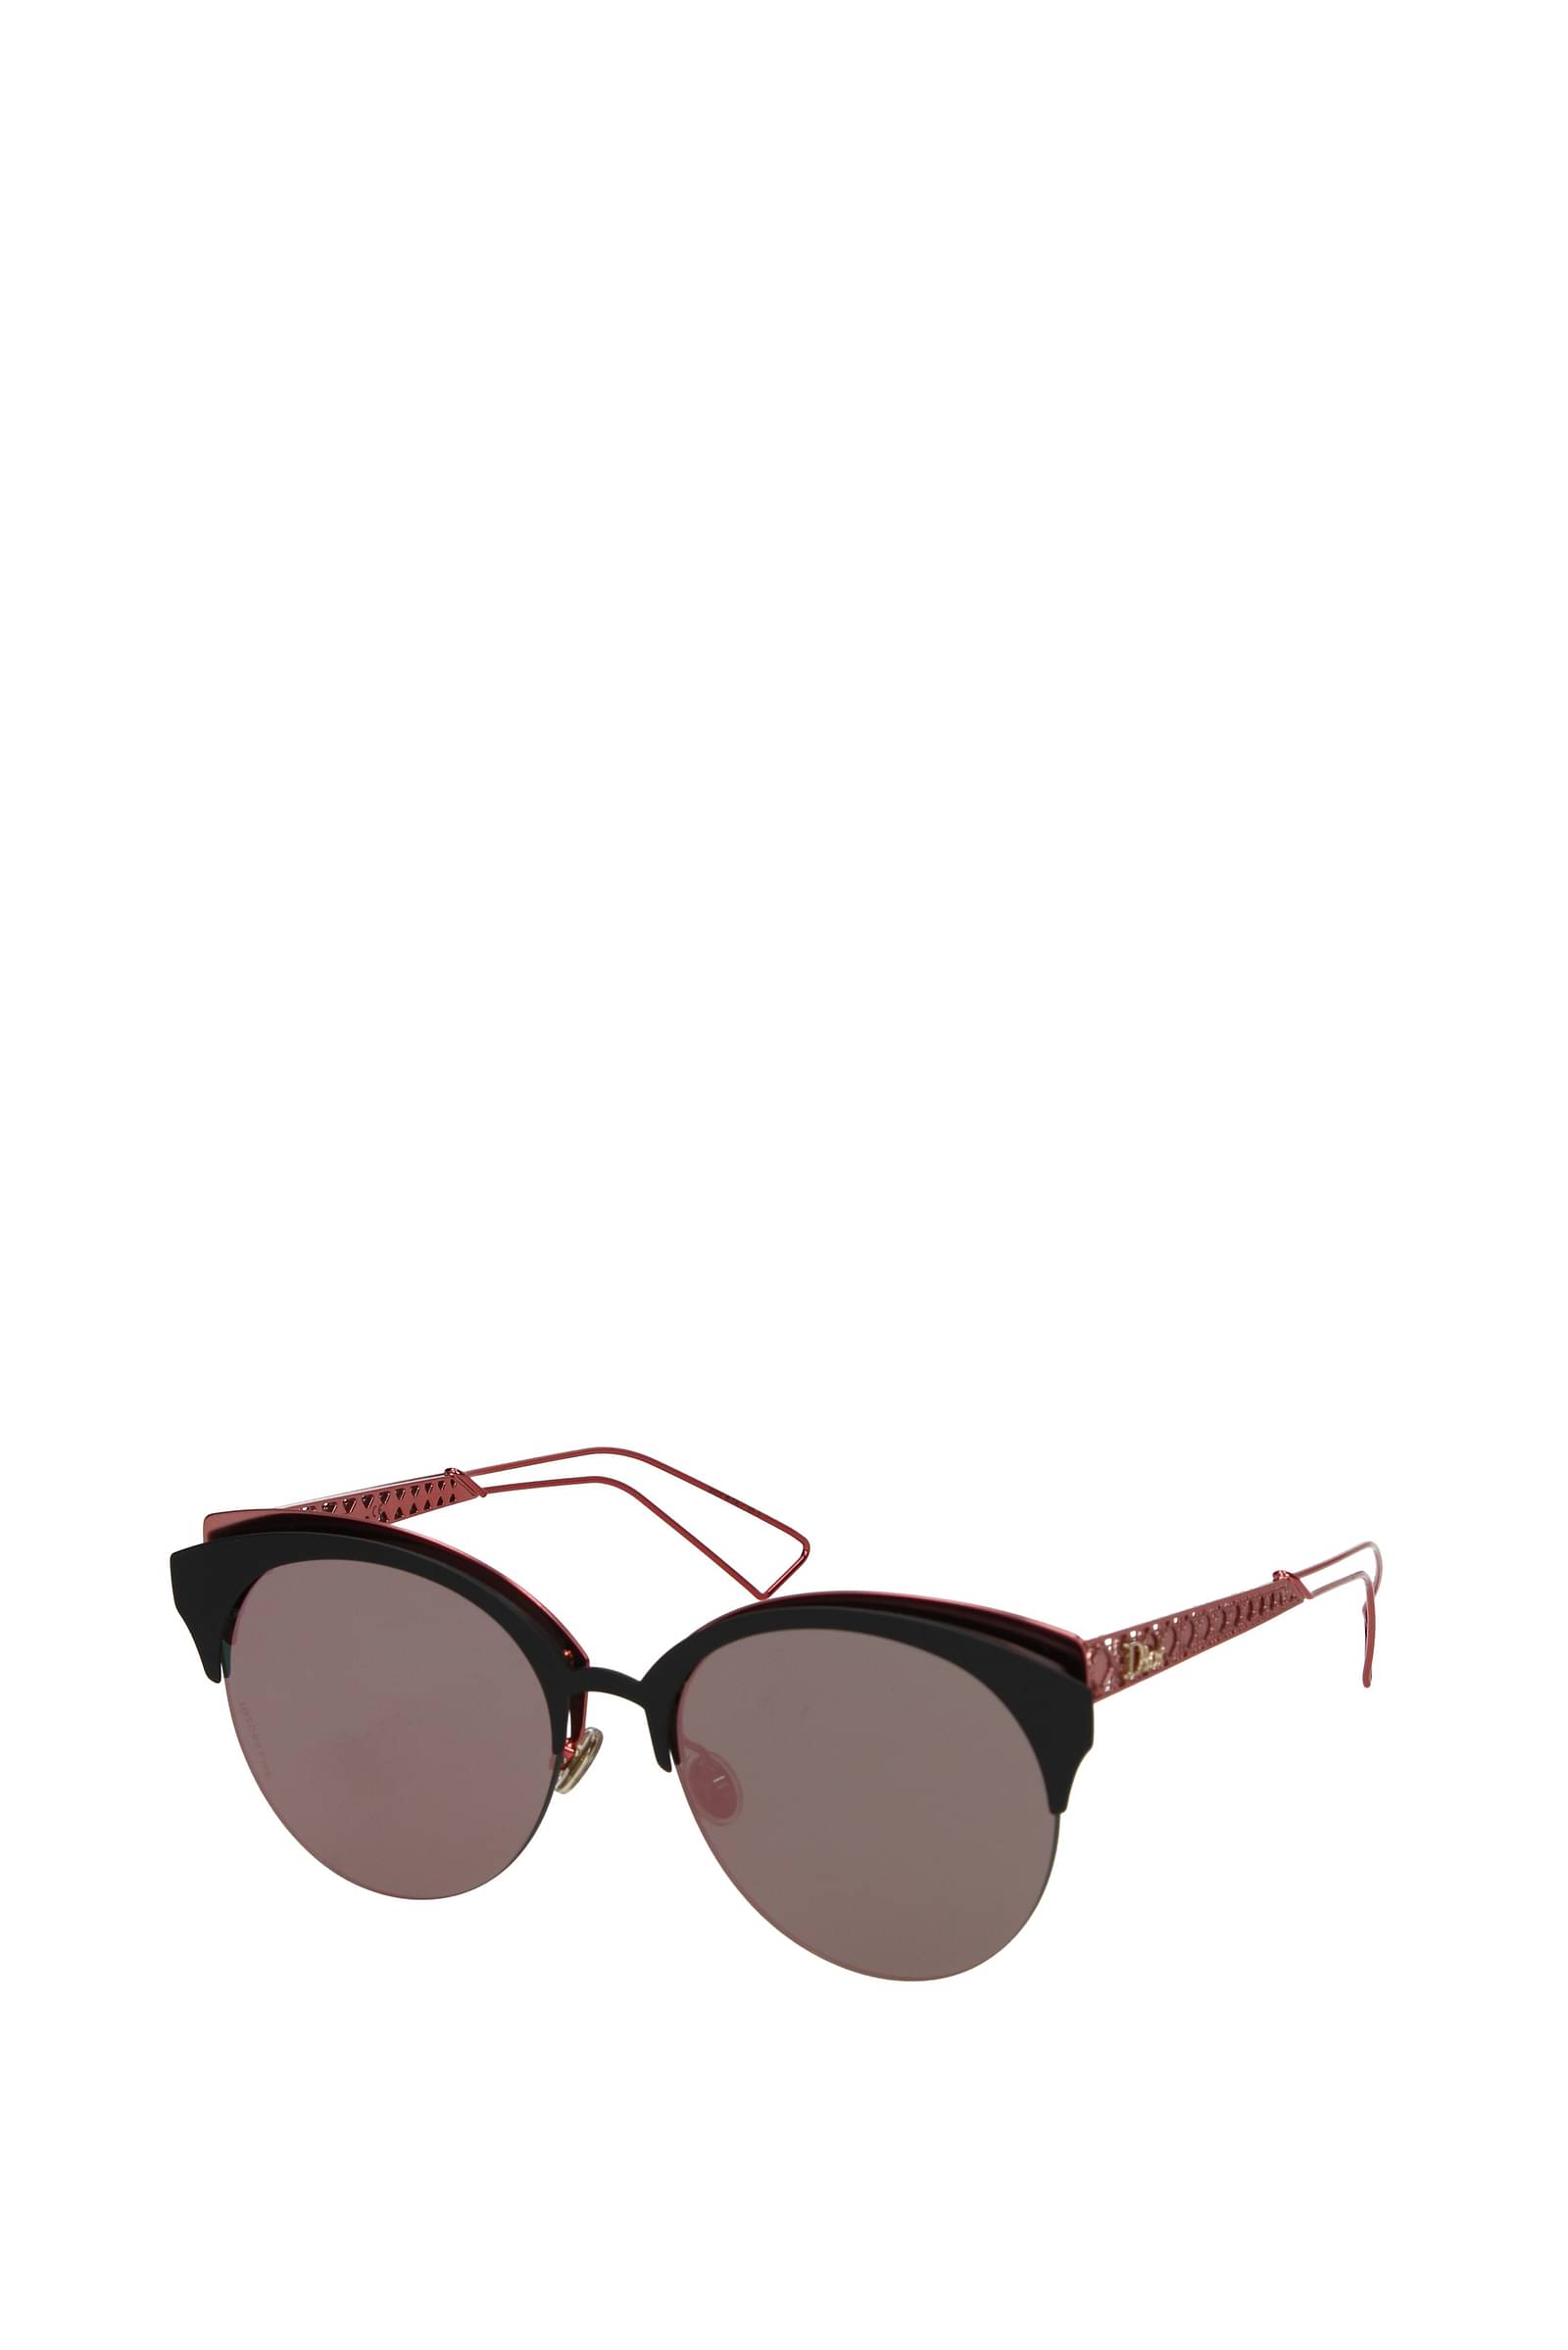 DiorSignature B7I Translucent Pink Butterfly Sunglasses  DIOR LT